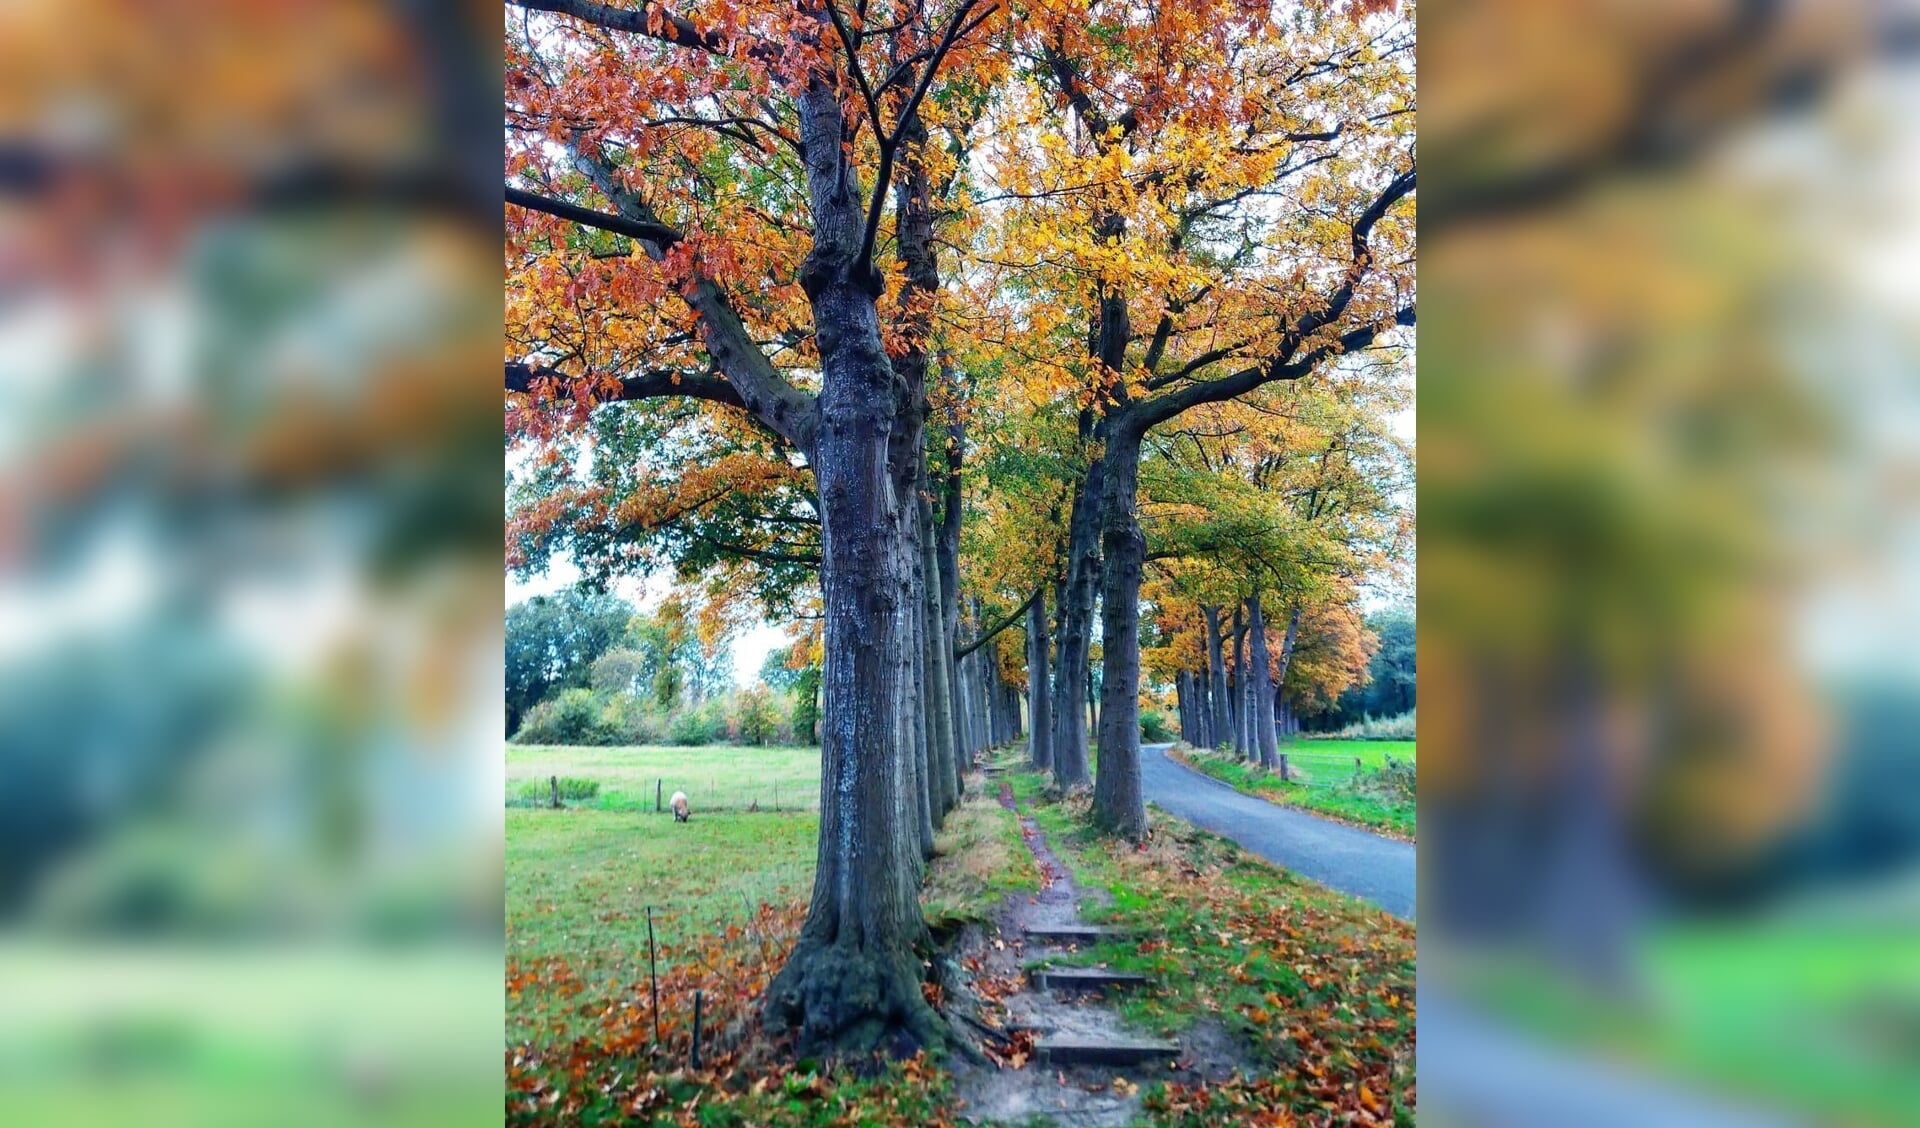 Prachtig wandelpaadje gehuld in herfstkleuren. Zuthemerweg. 